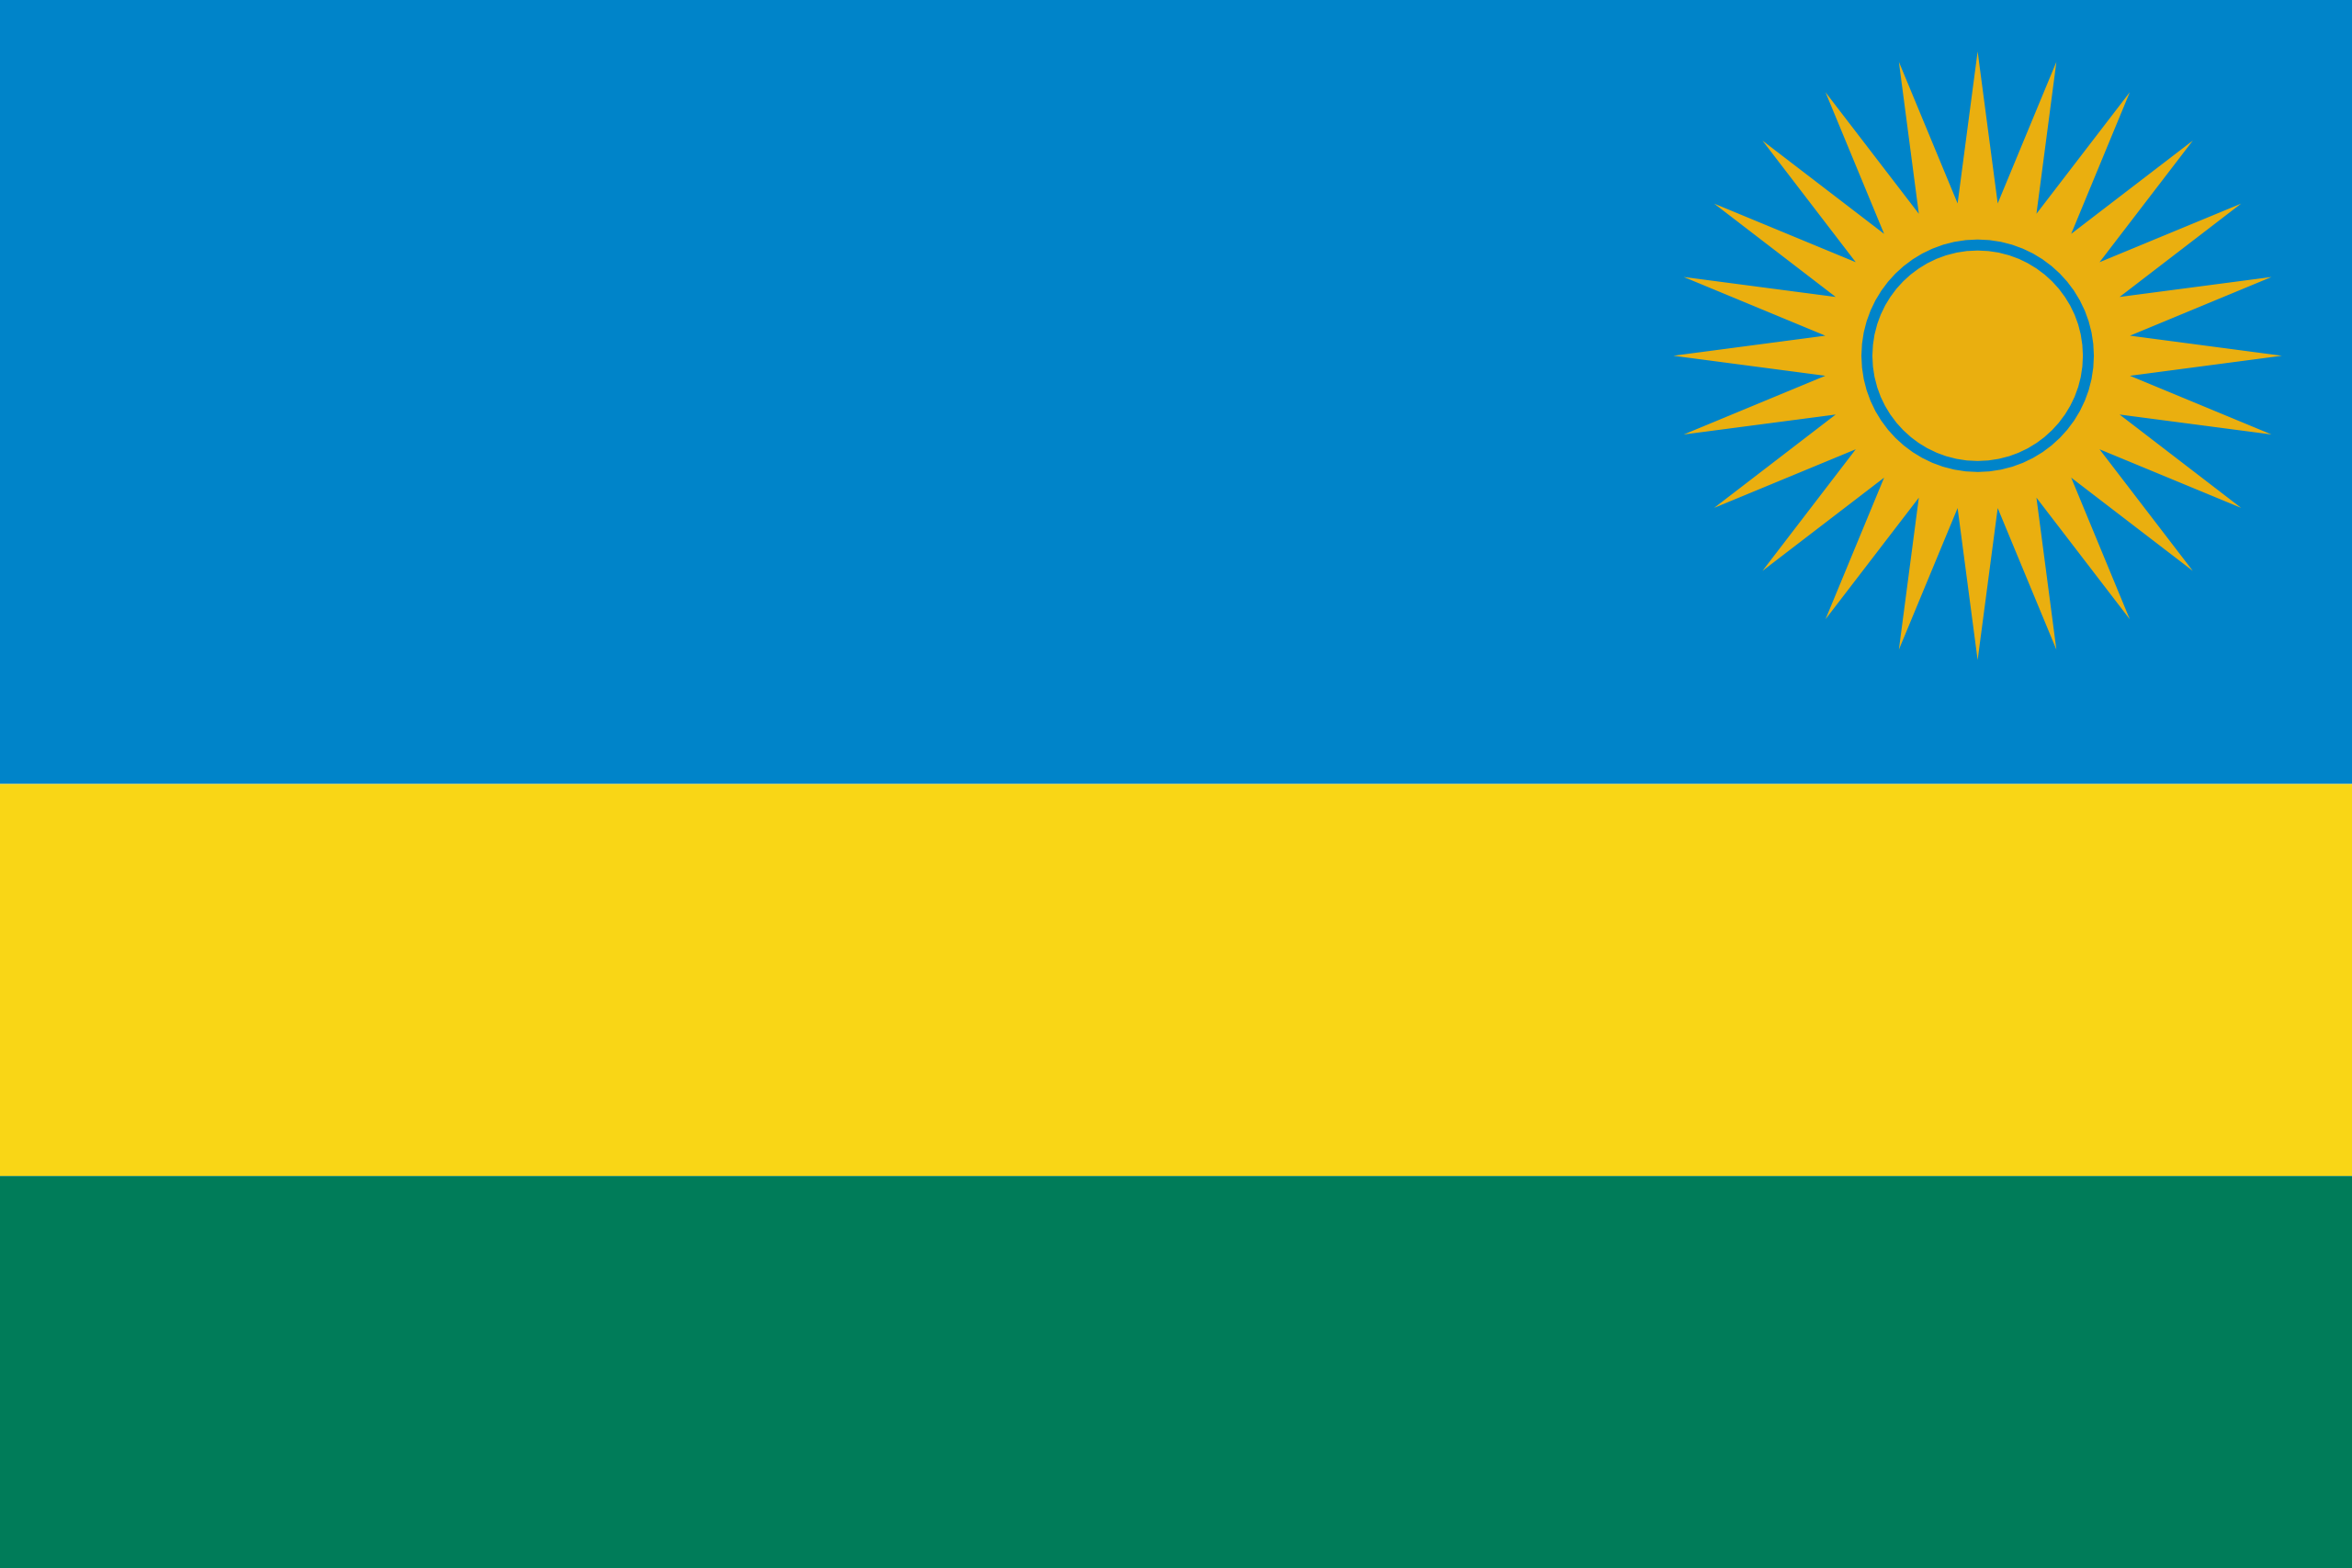 Blue and Yellow Capital M Logo - Rwanda | Flags of countries